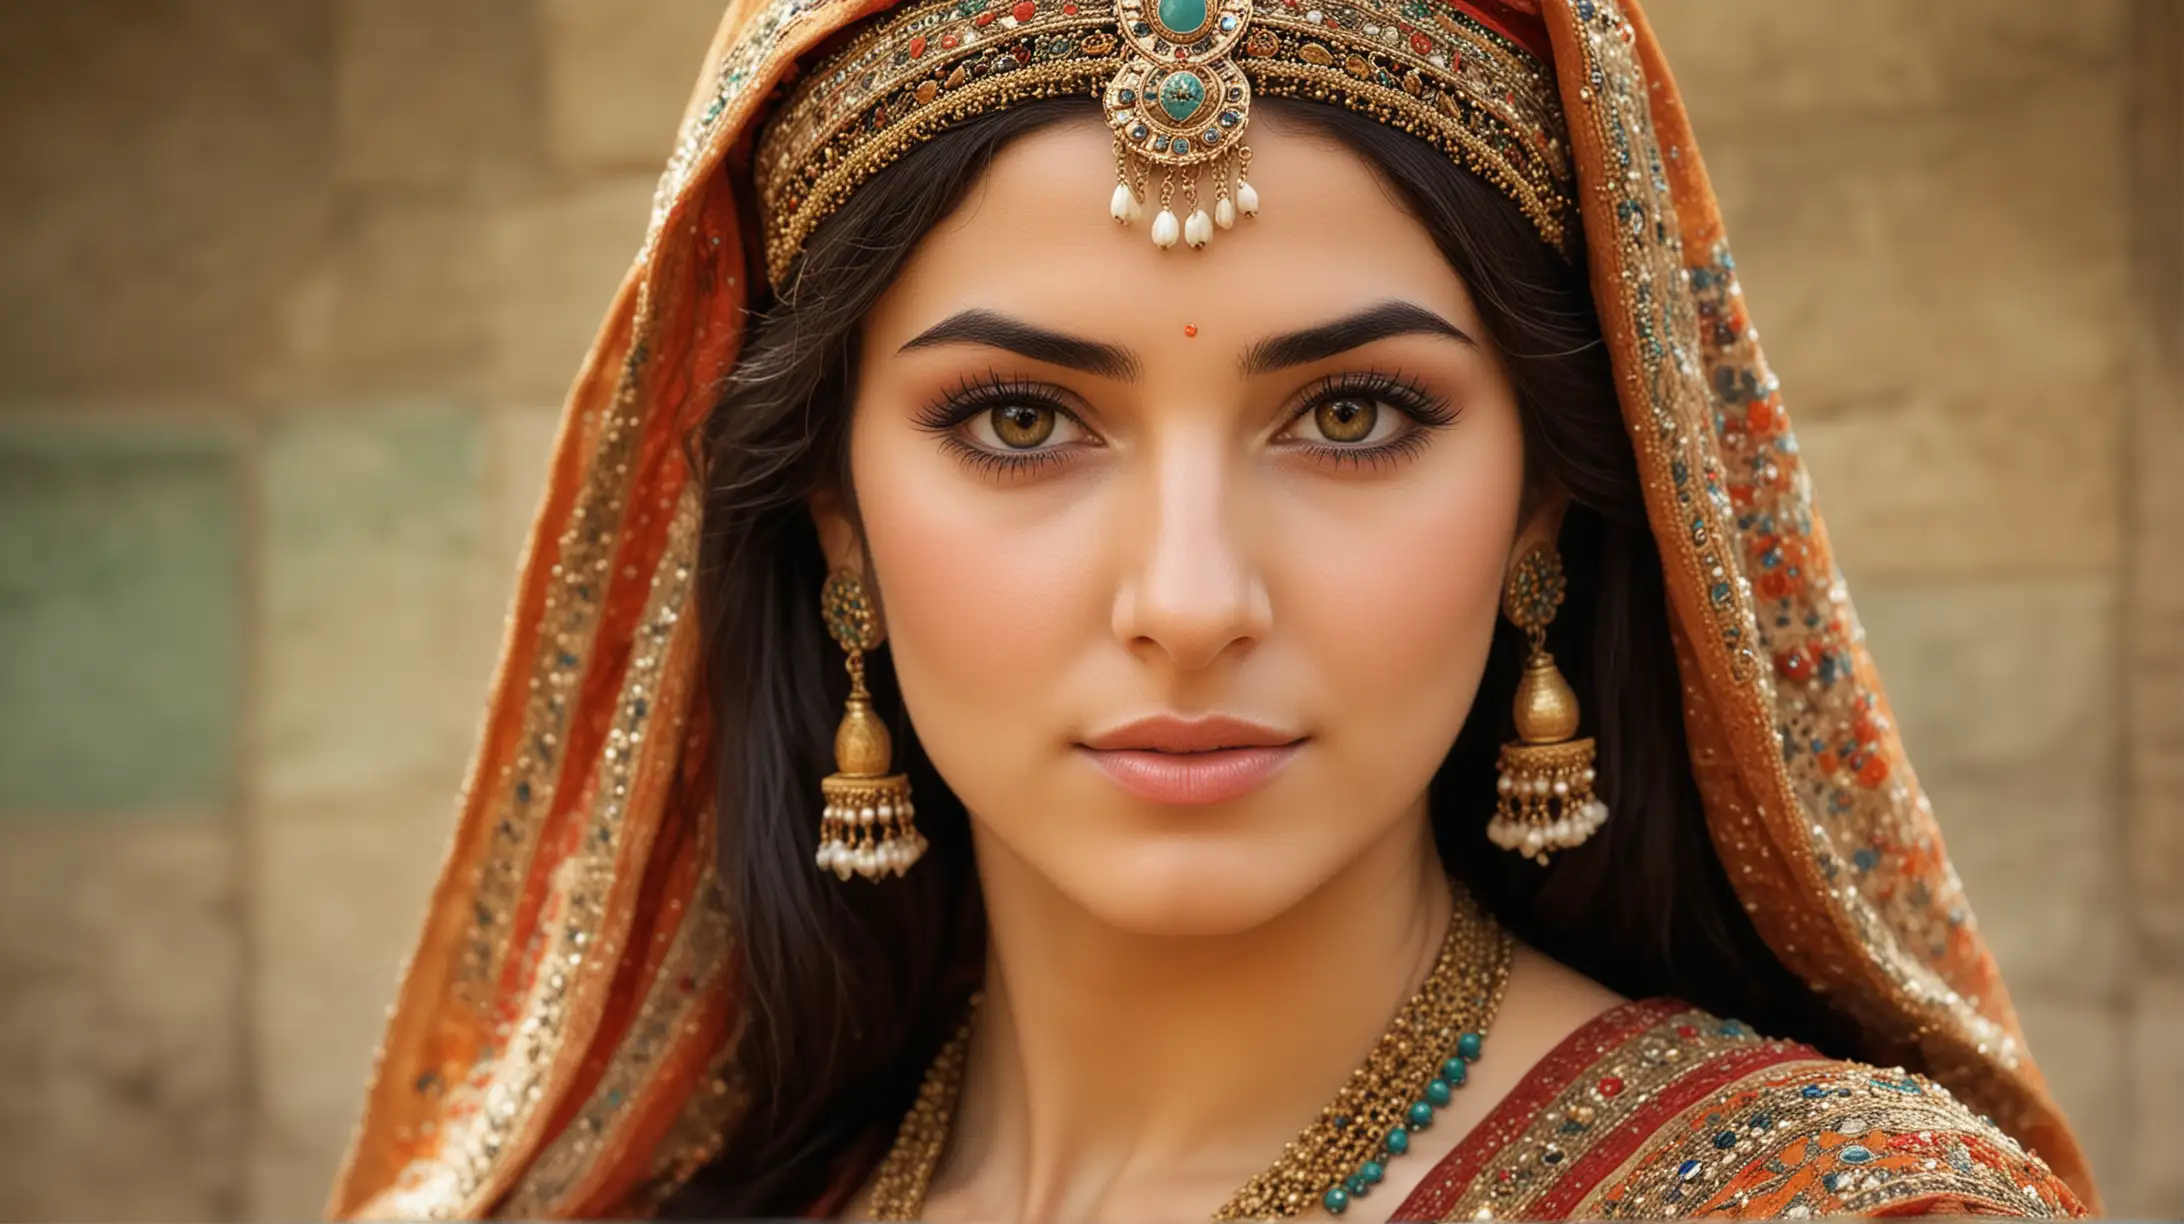 Elegant Persian Woman in Traditional Attire